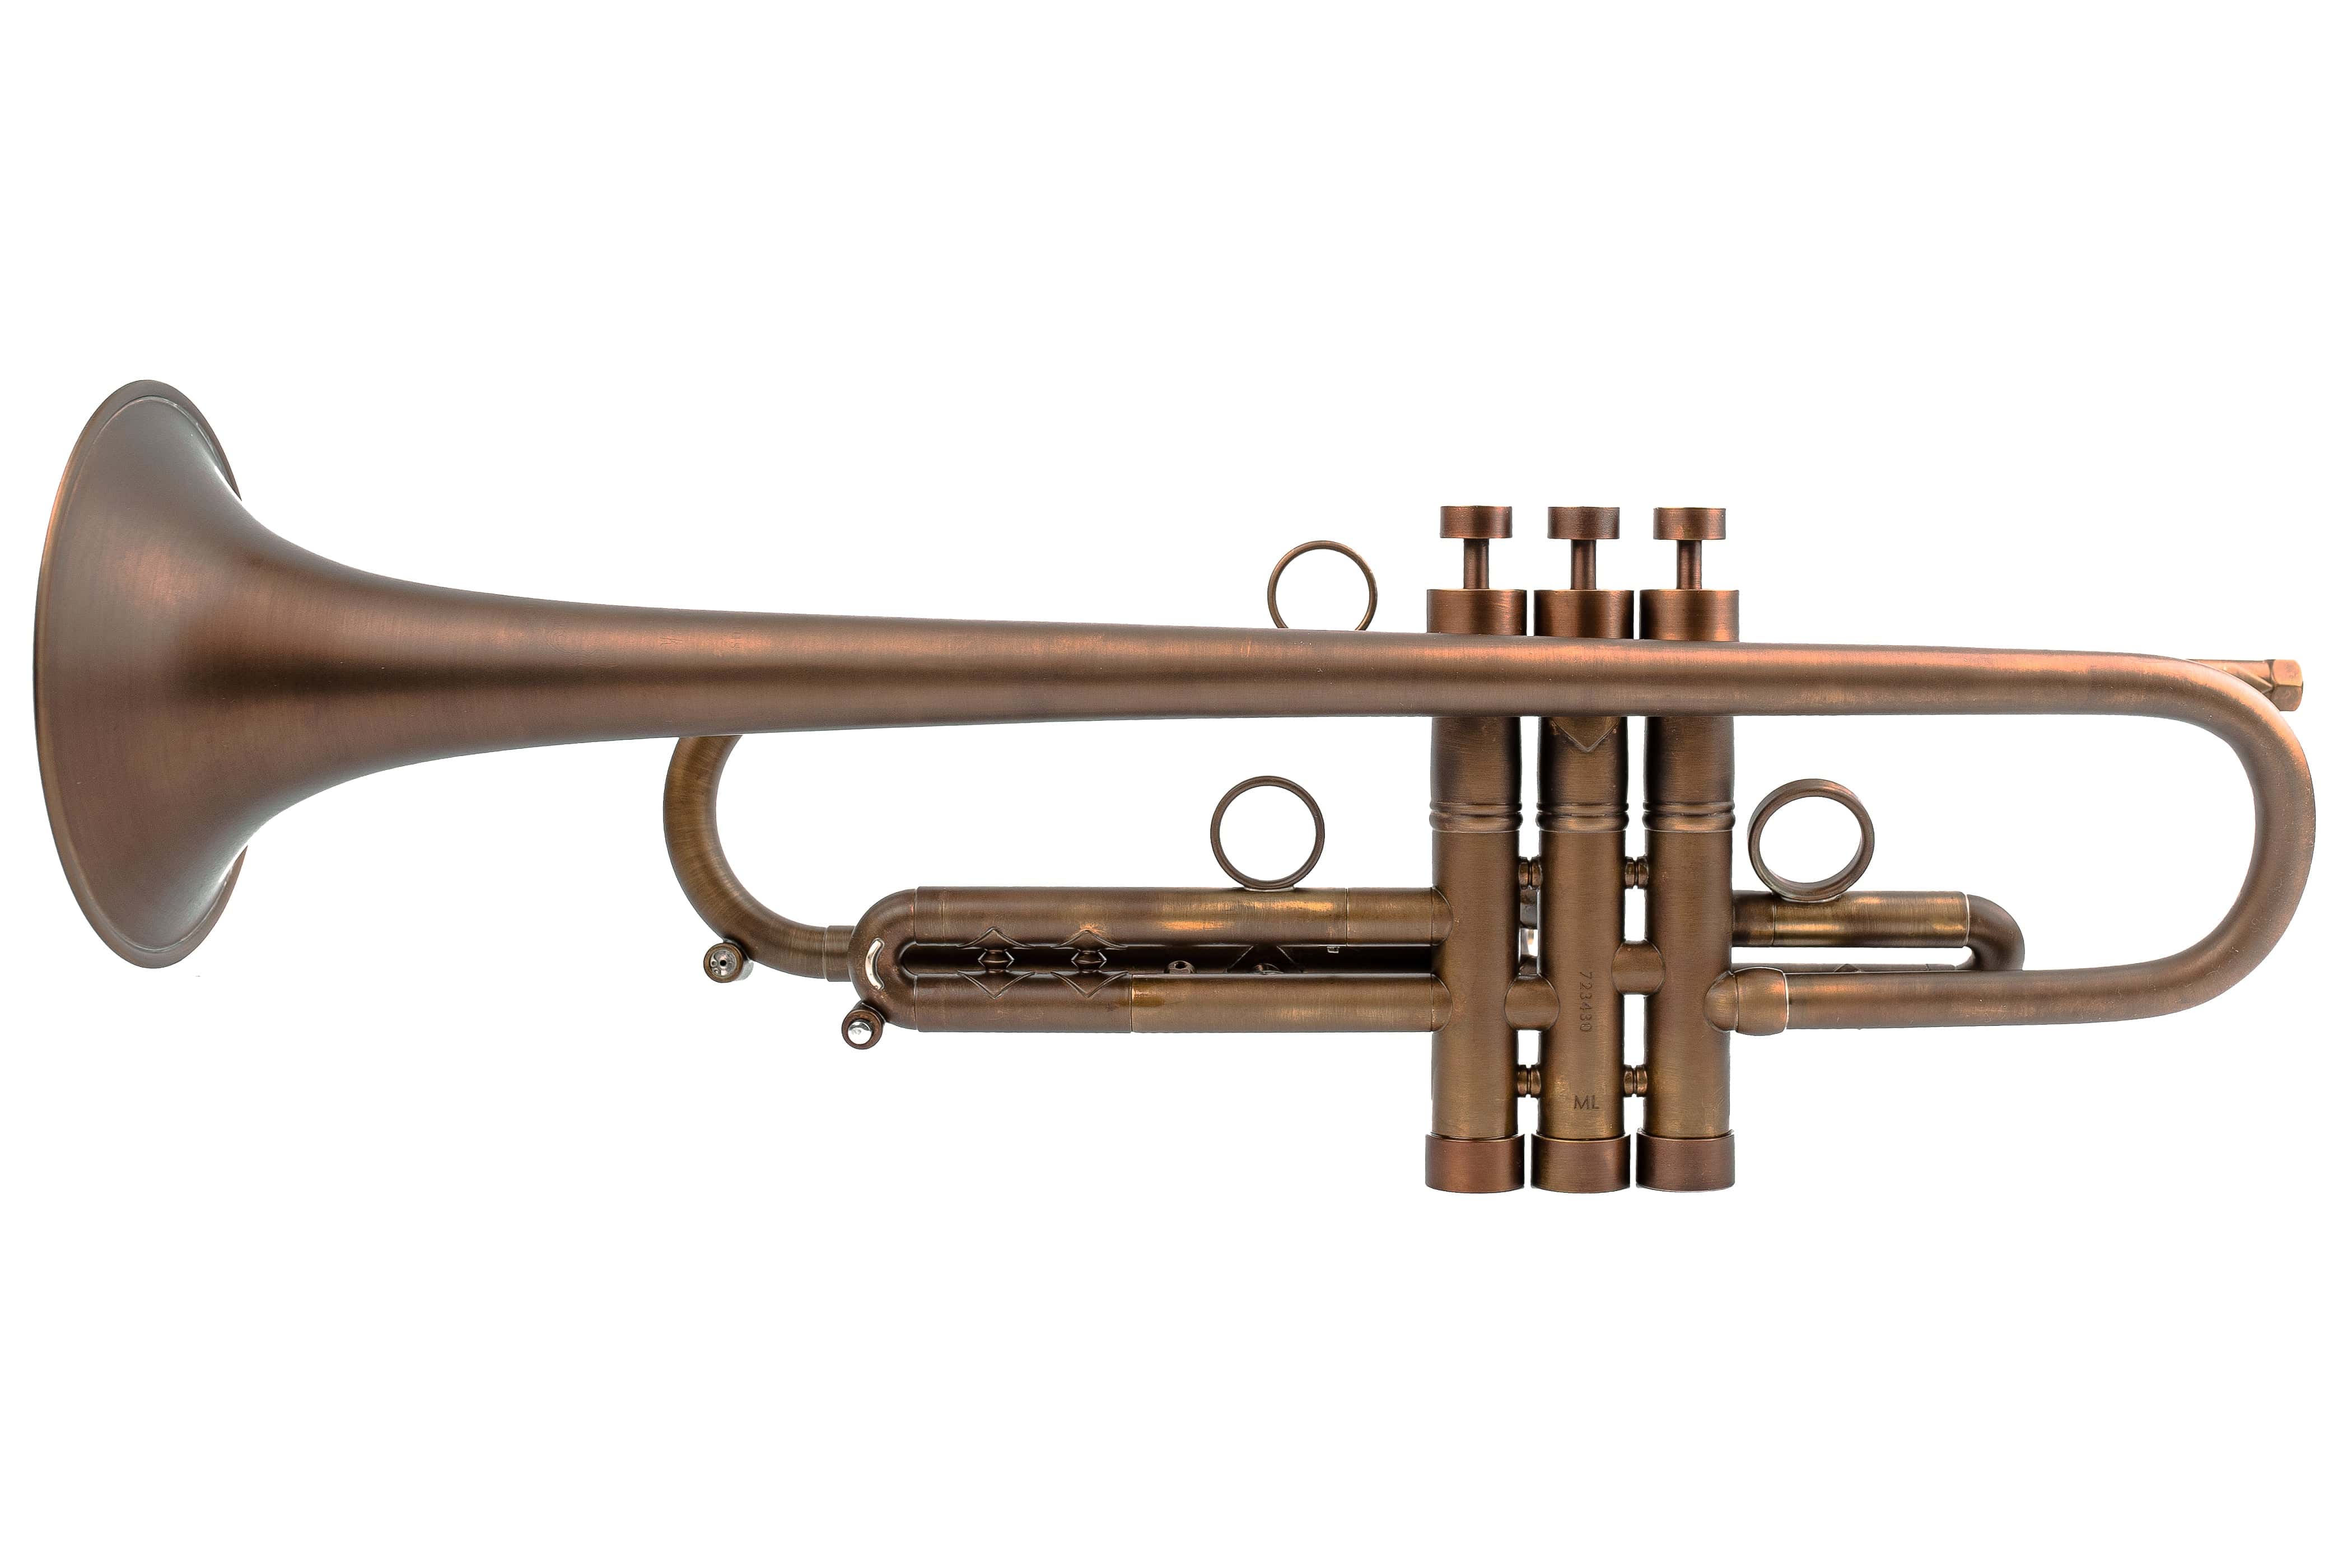 Bach Stradivarius 180-37 LR 25 trumpet customized by KGUmusic